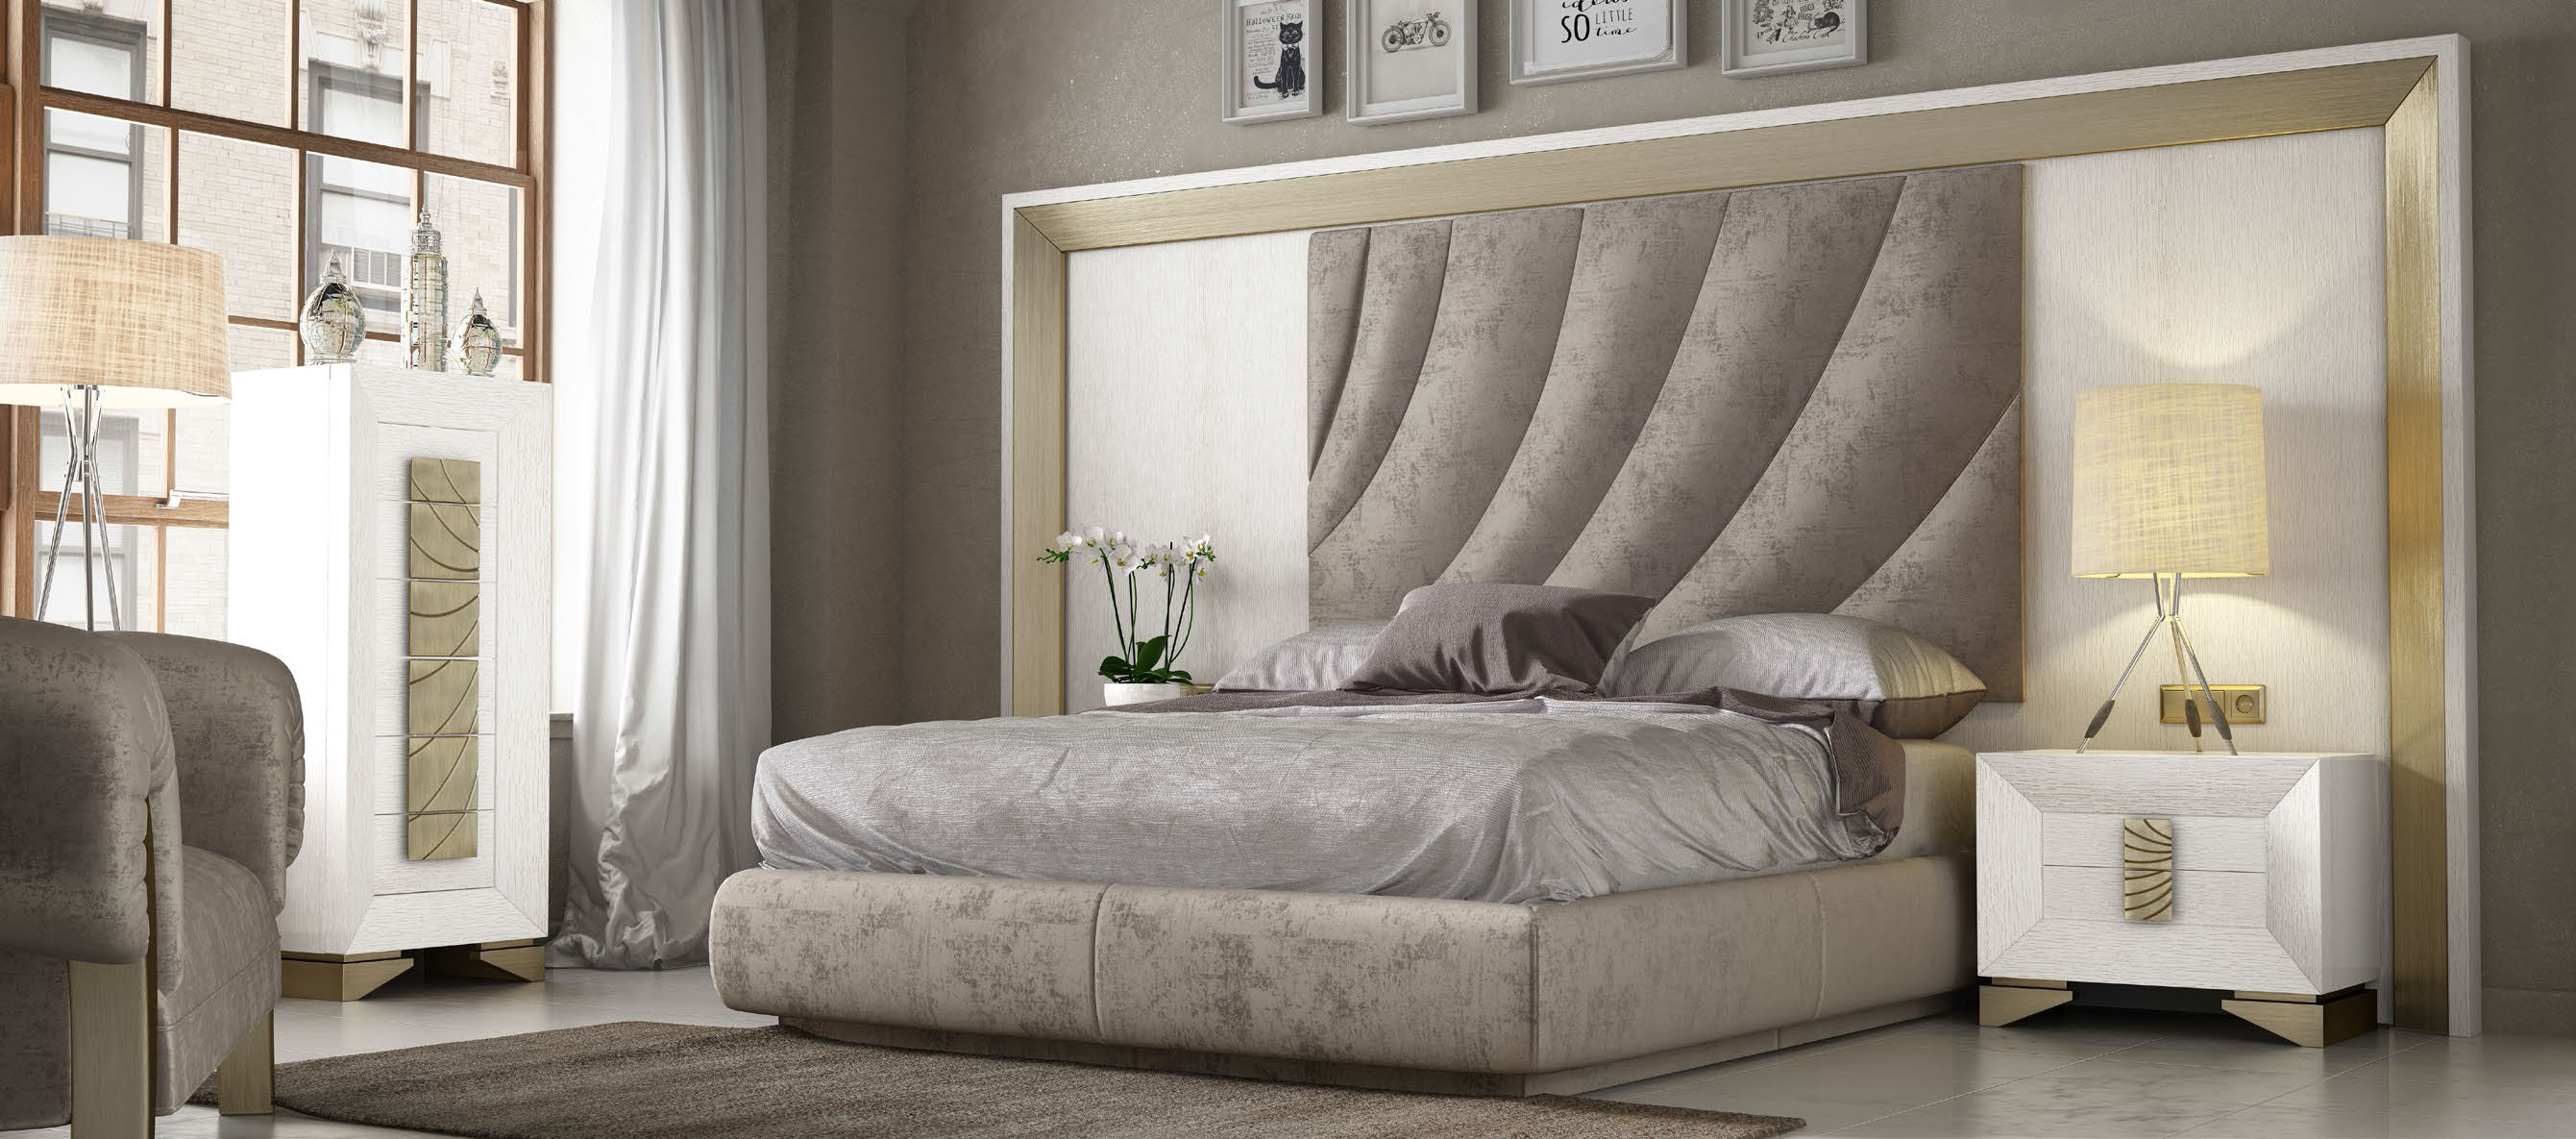 Bedroom Furniture Beds with storage DOR 128